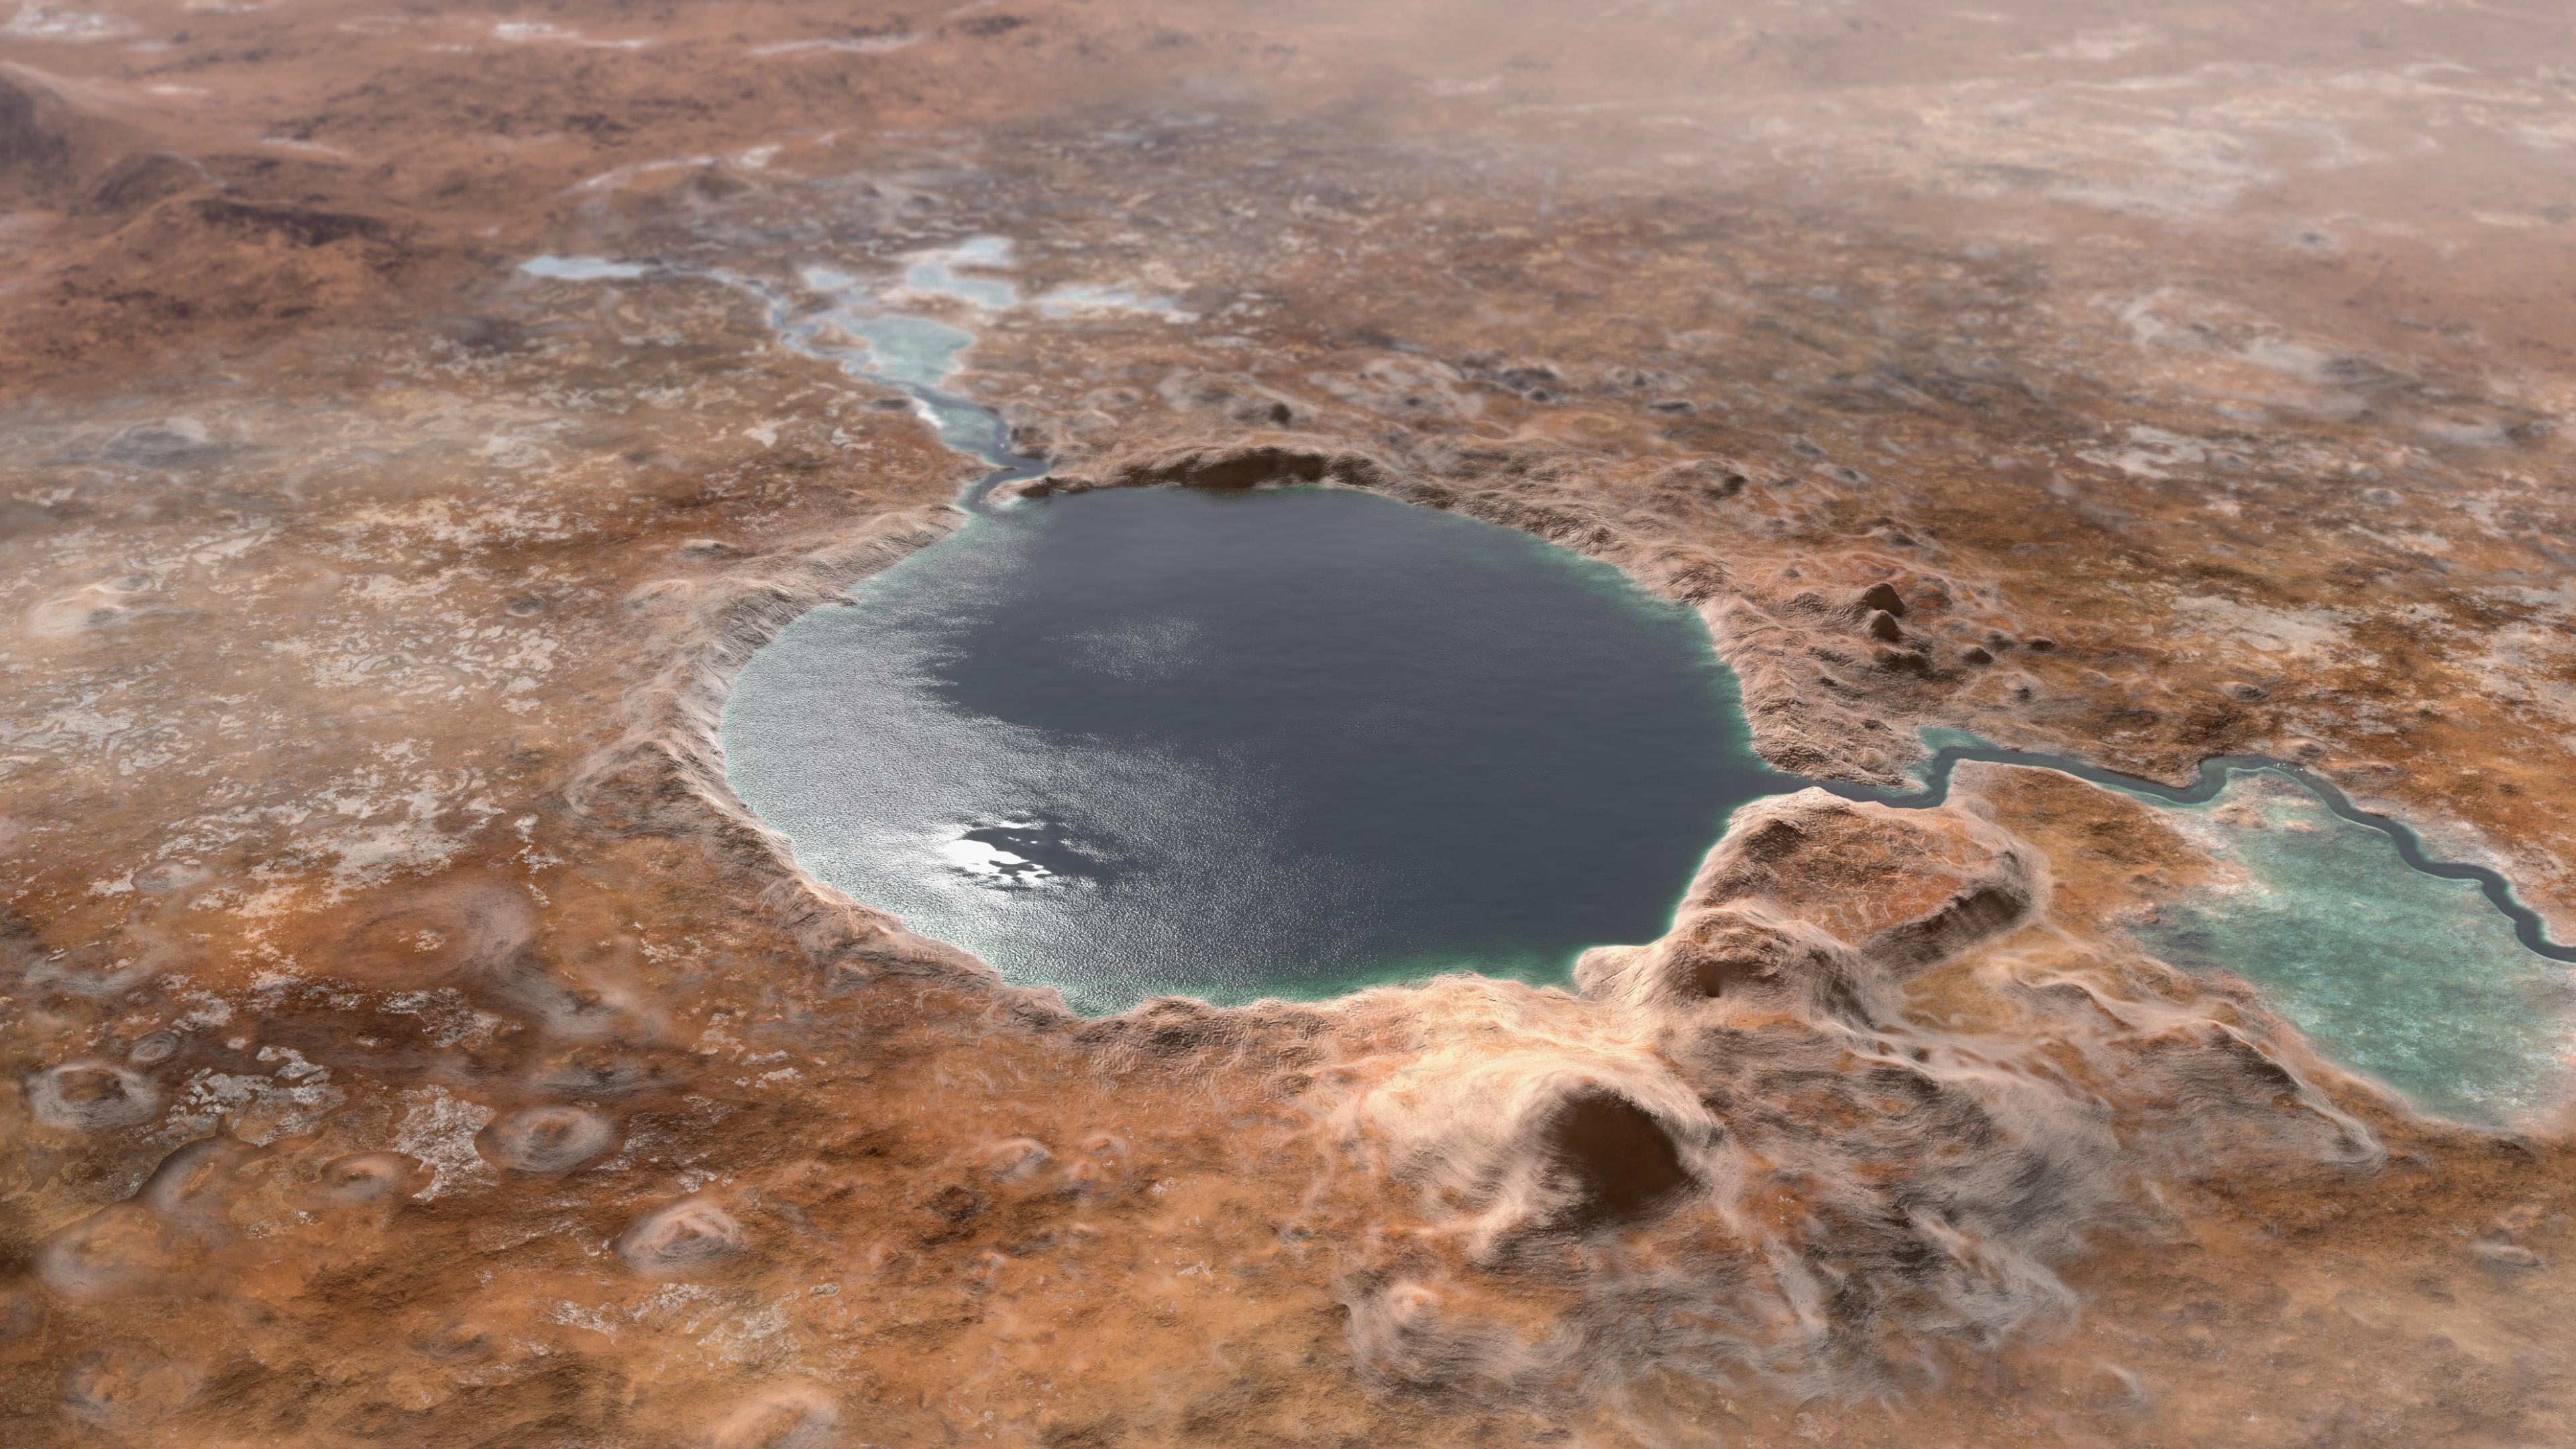 jezero crater lake